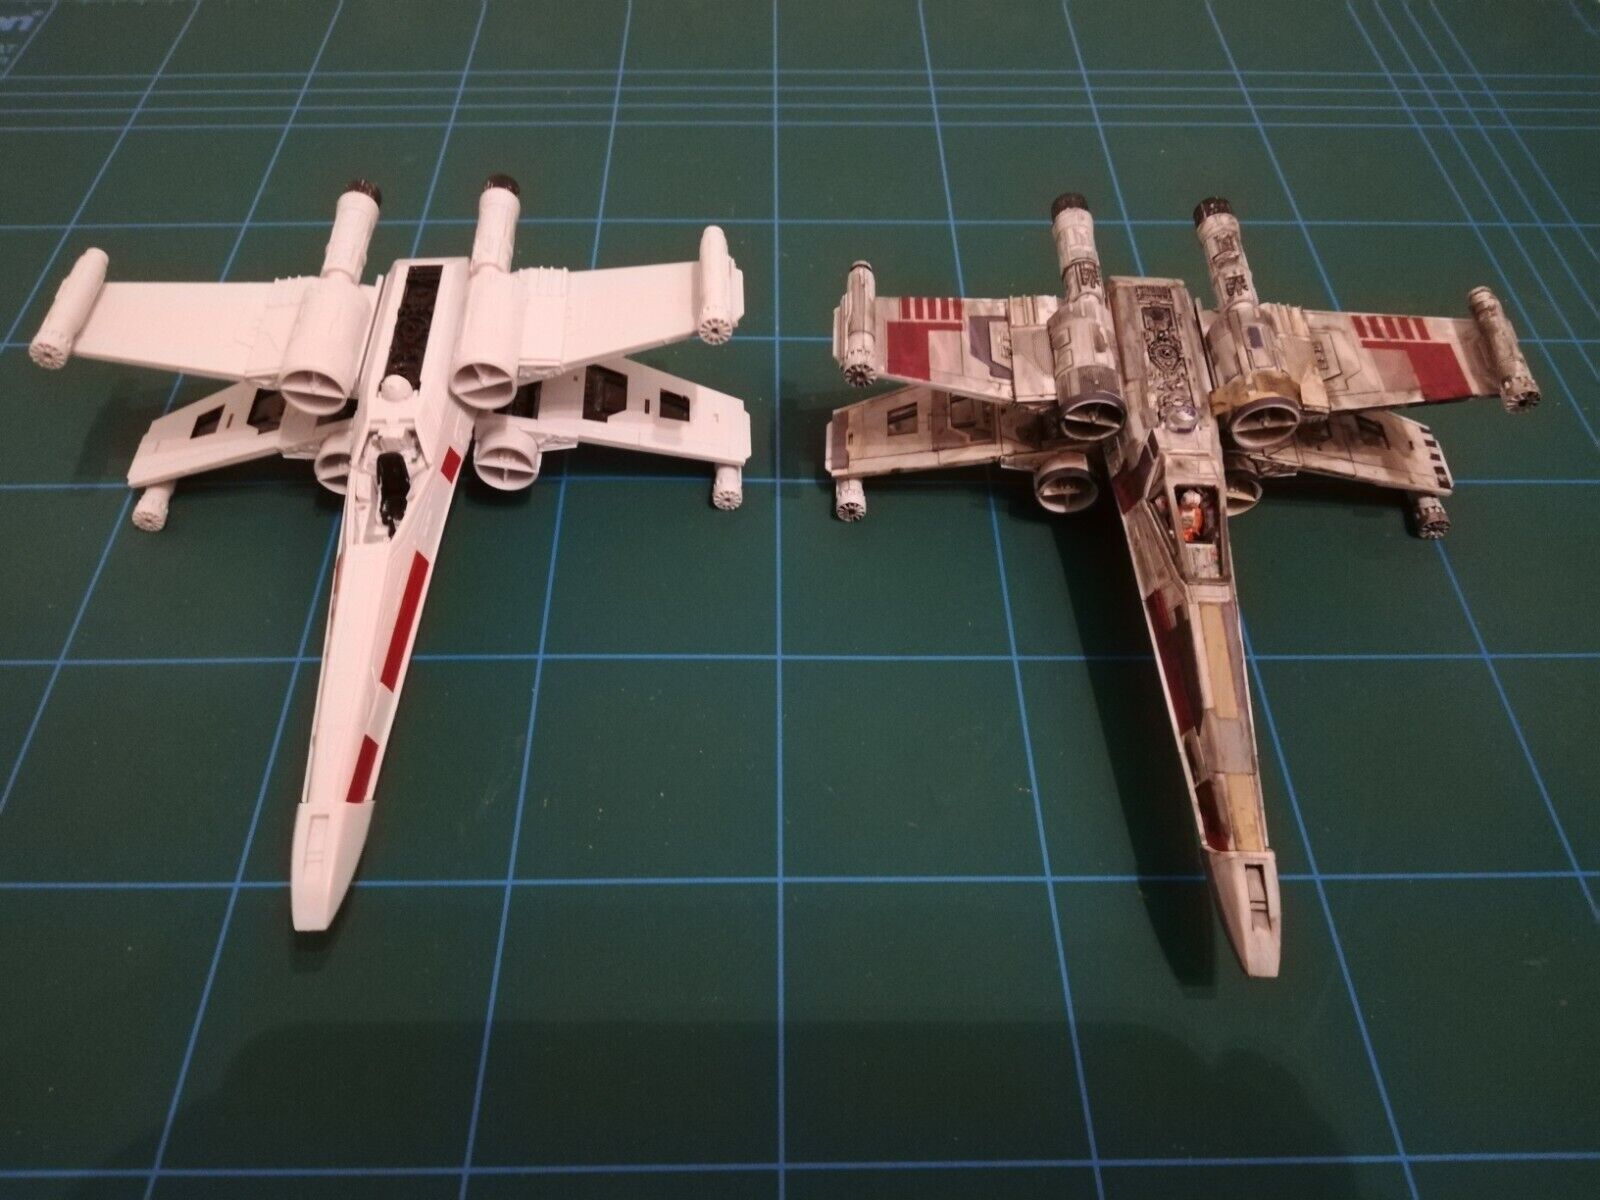 Bandai Star Wars X-Wing 1/72 Model Kit zusammengebaut & bemalt